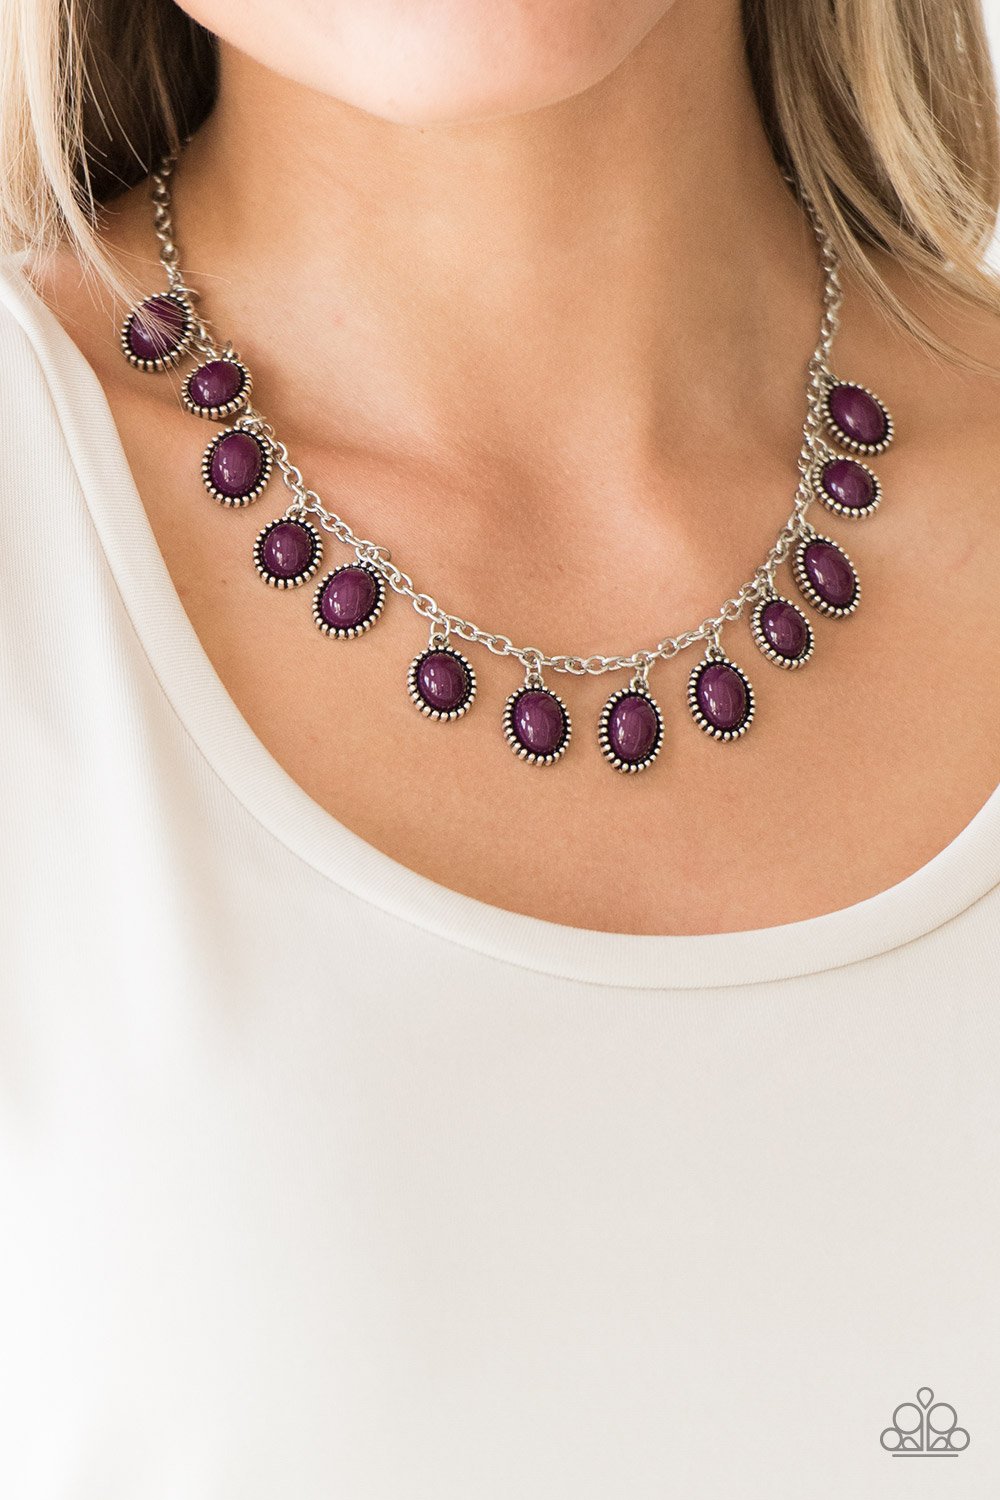 Make Some Roam-purple-Paparazzi necklace